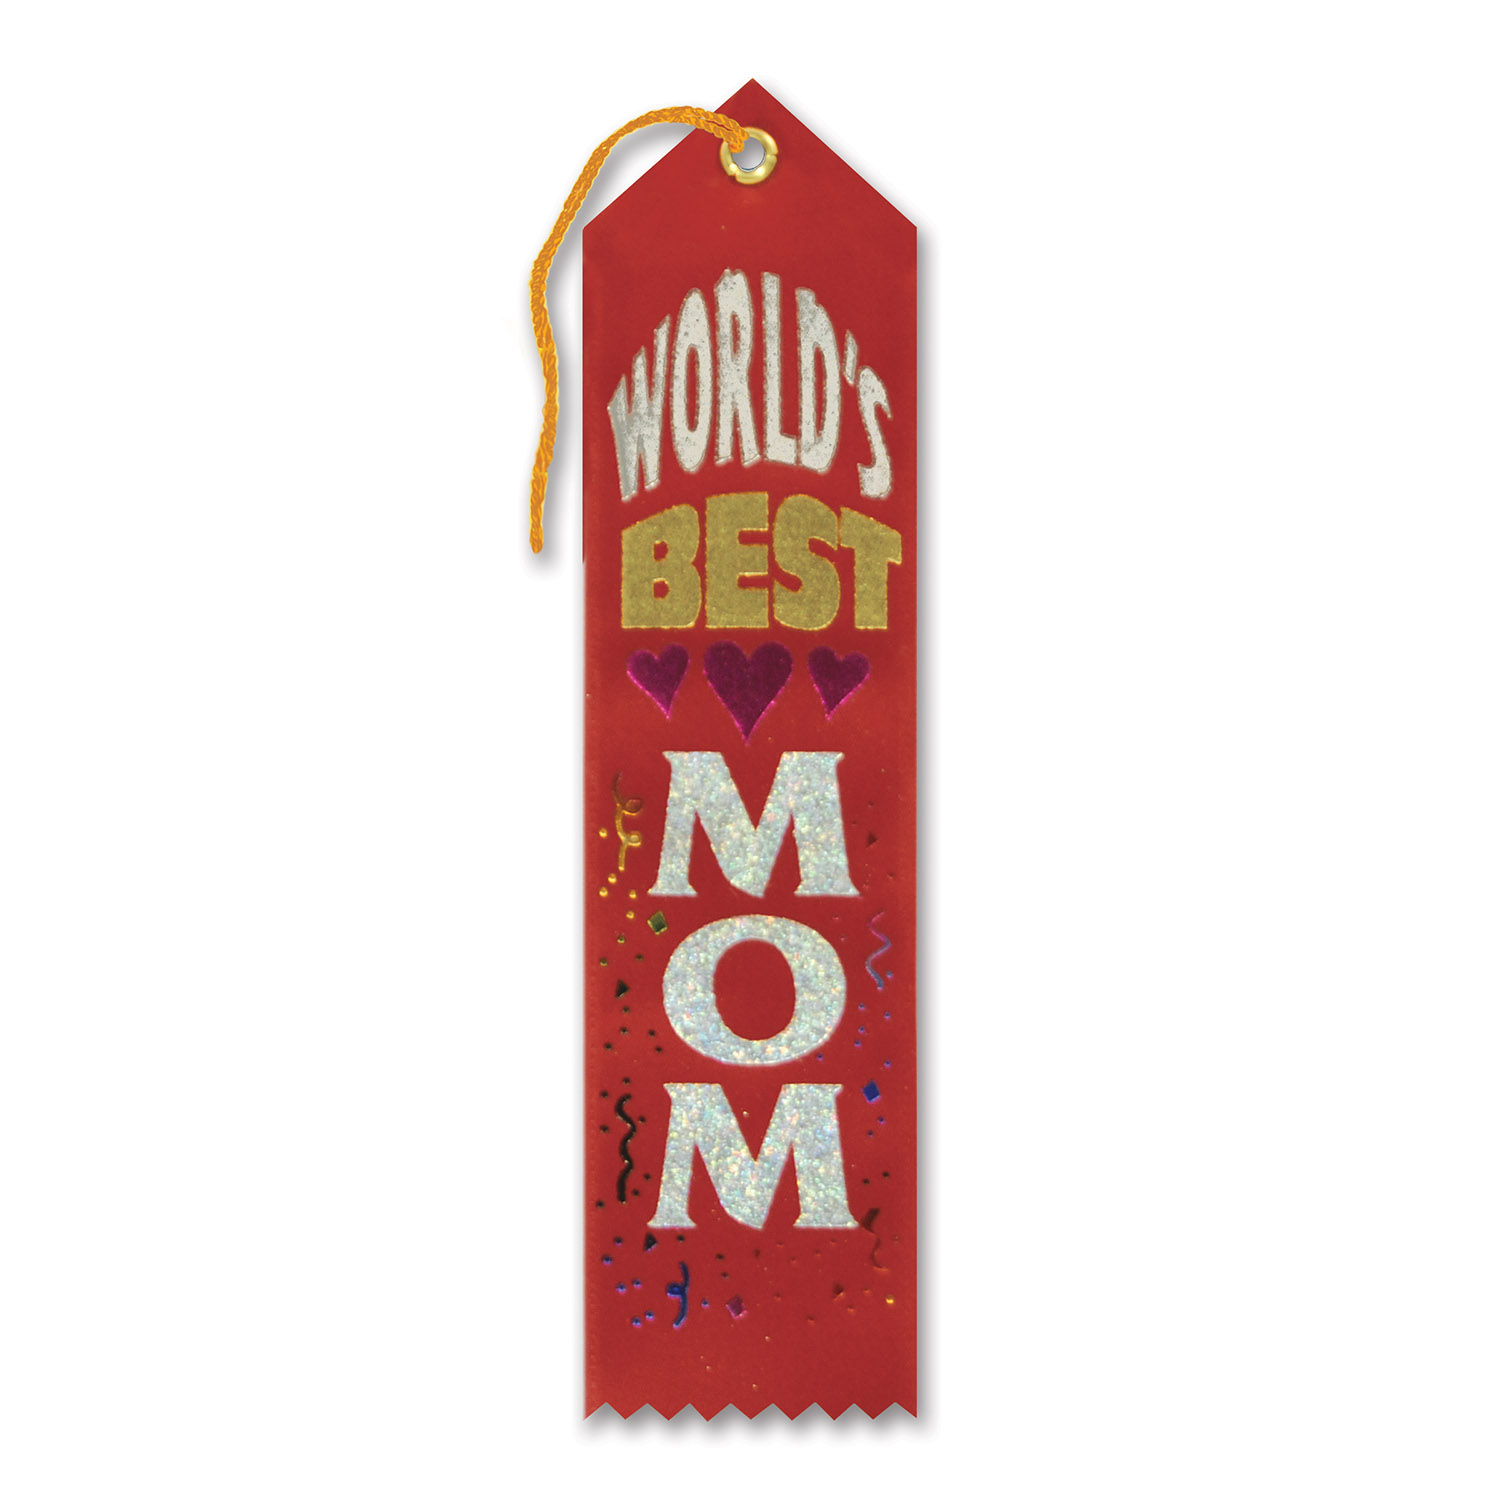 6 Pieces World's Best Mom Award Ribbon - Bows & Ribbons